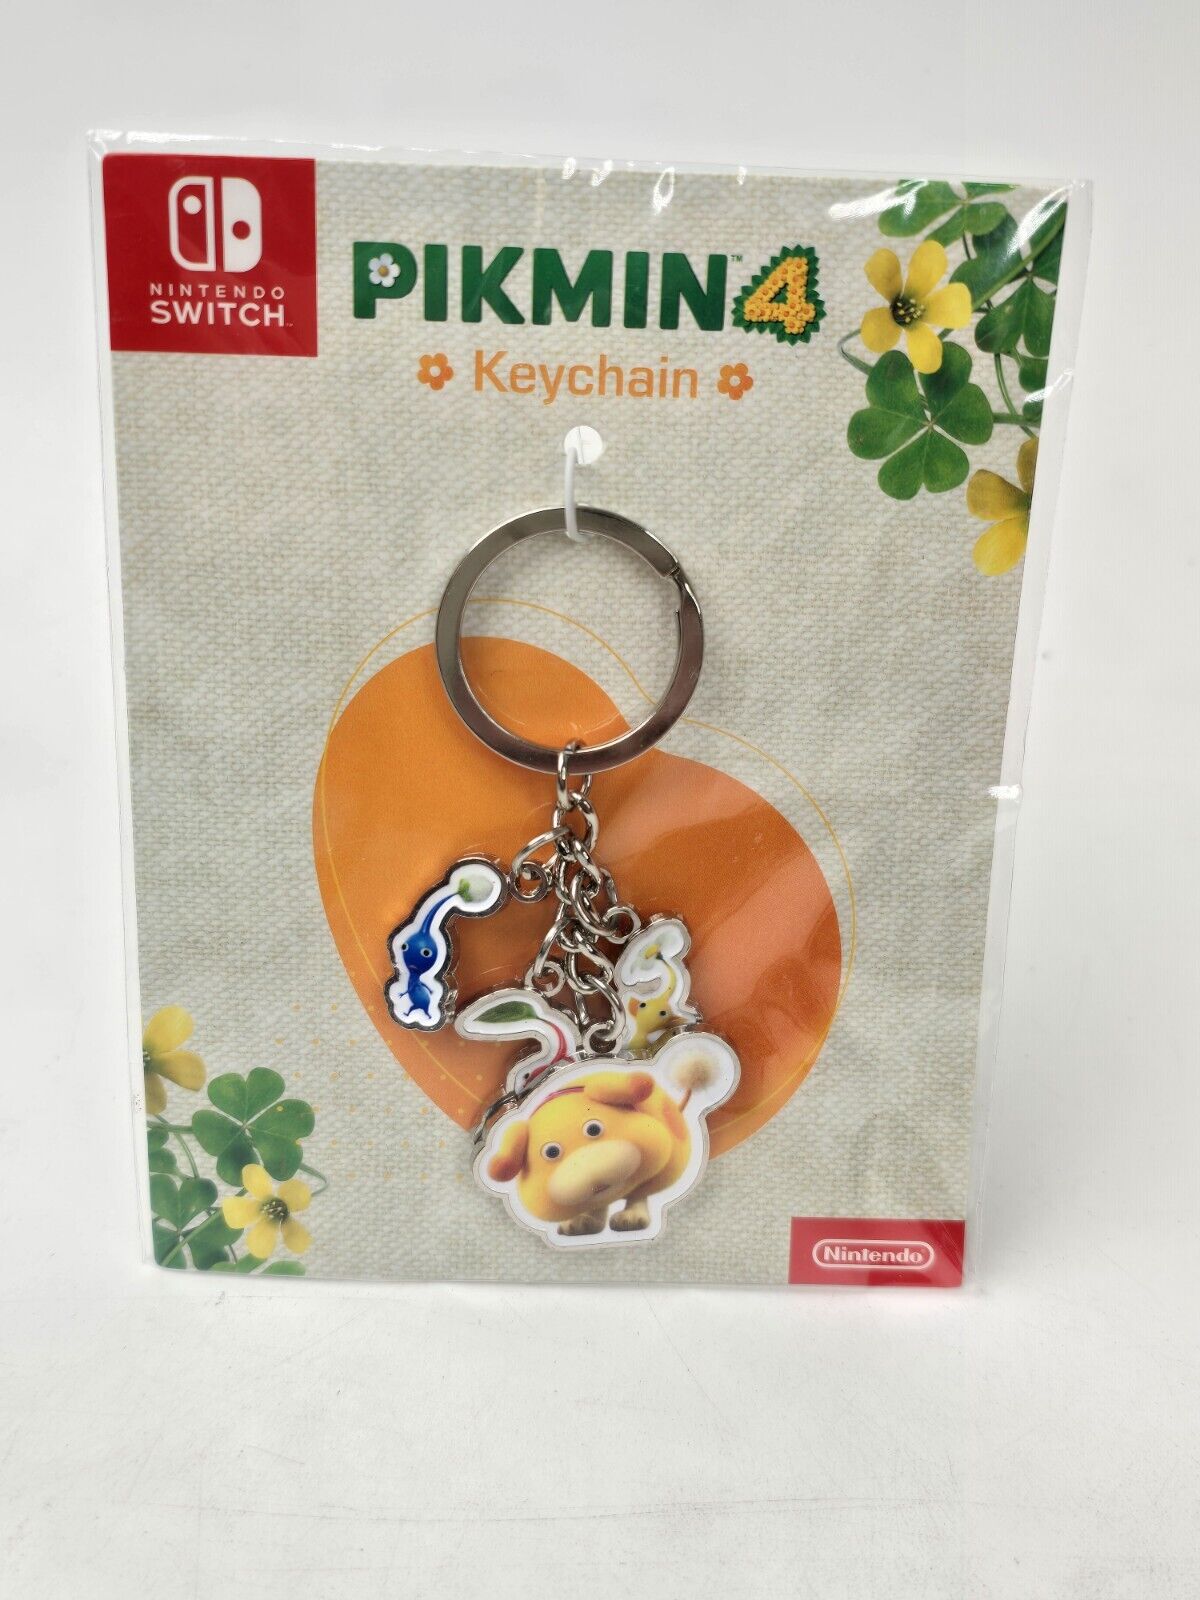 Pikmin 4 - Nintendo Switch - Keychain | Target Exclusive | 